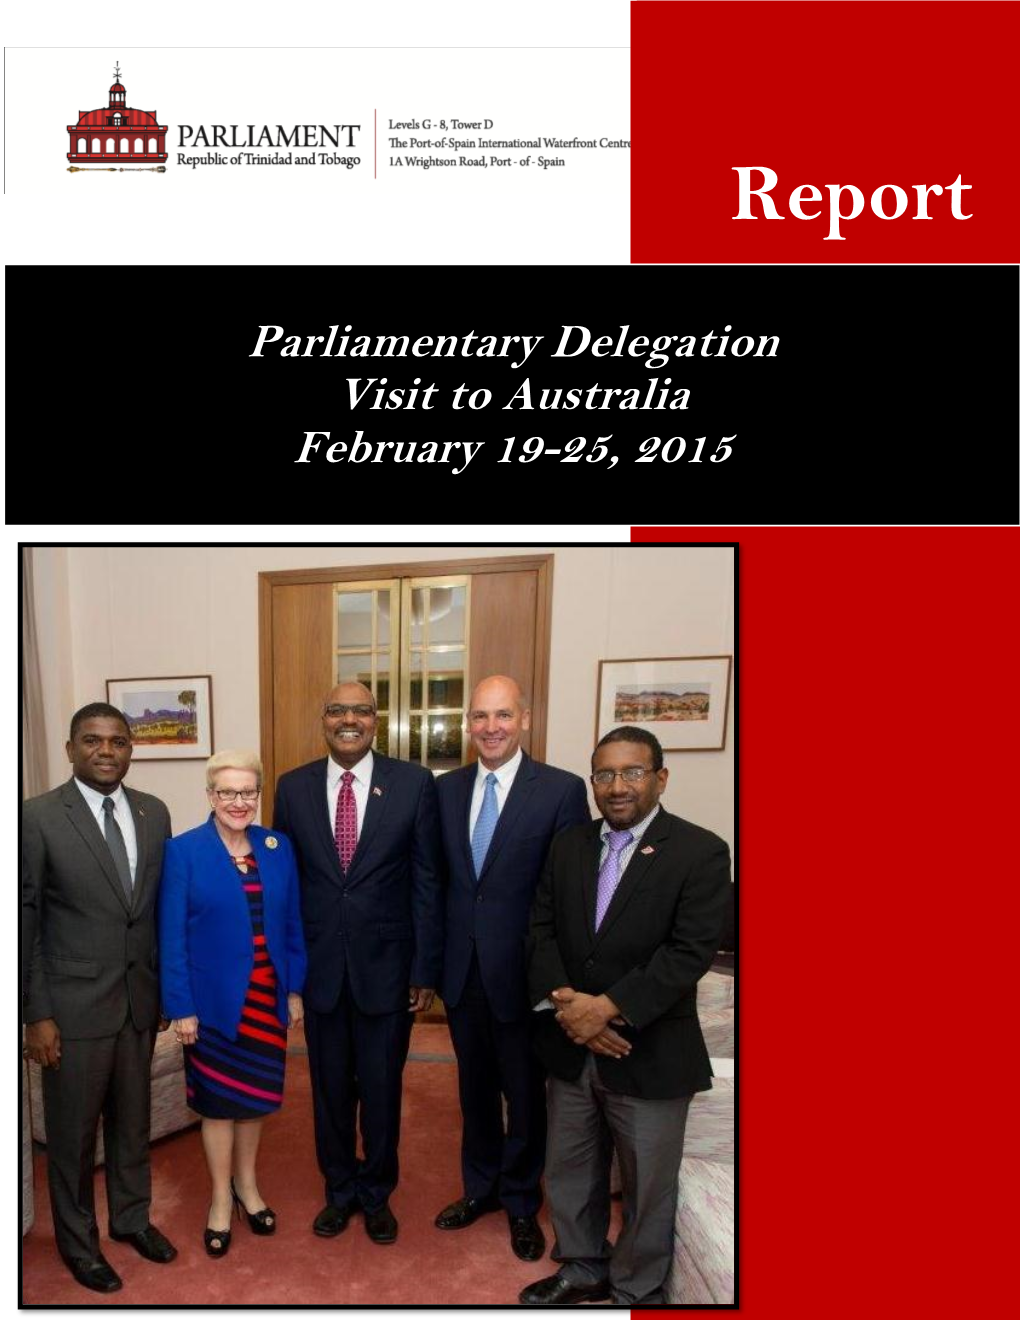 Parliamentary Delegation Visit to Australia February 19-25, 2015